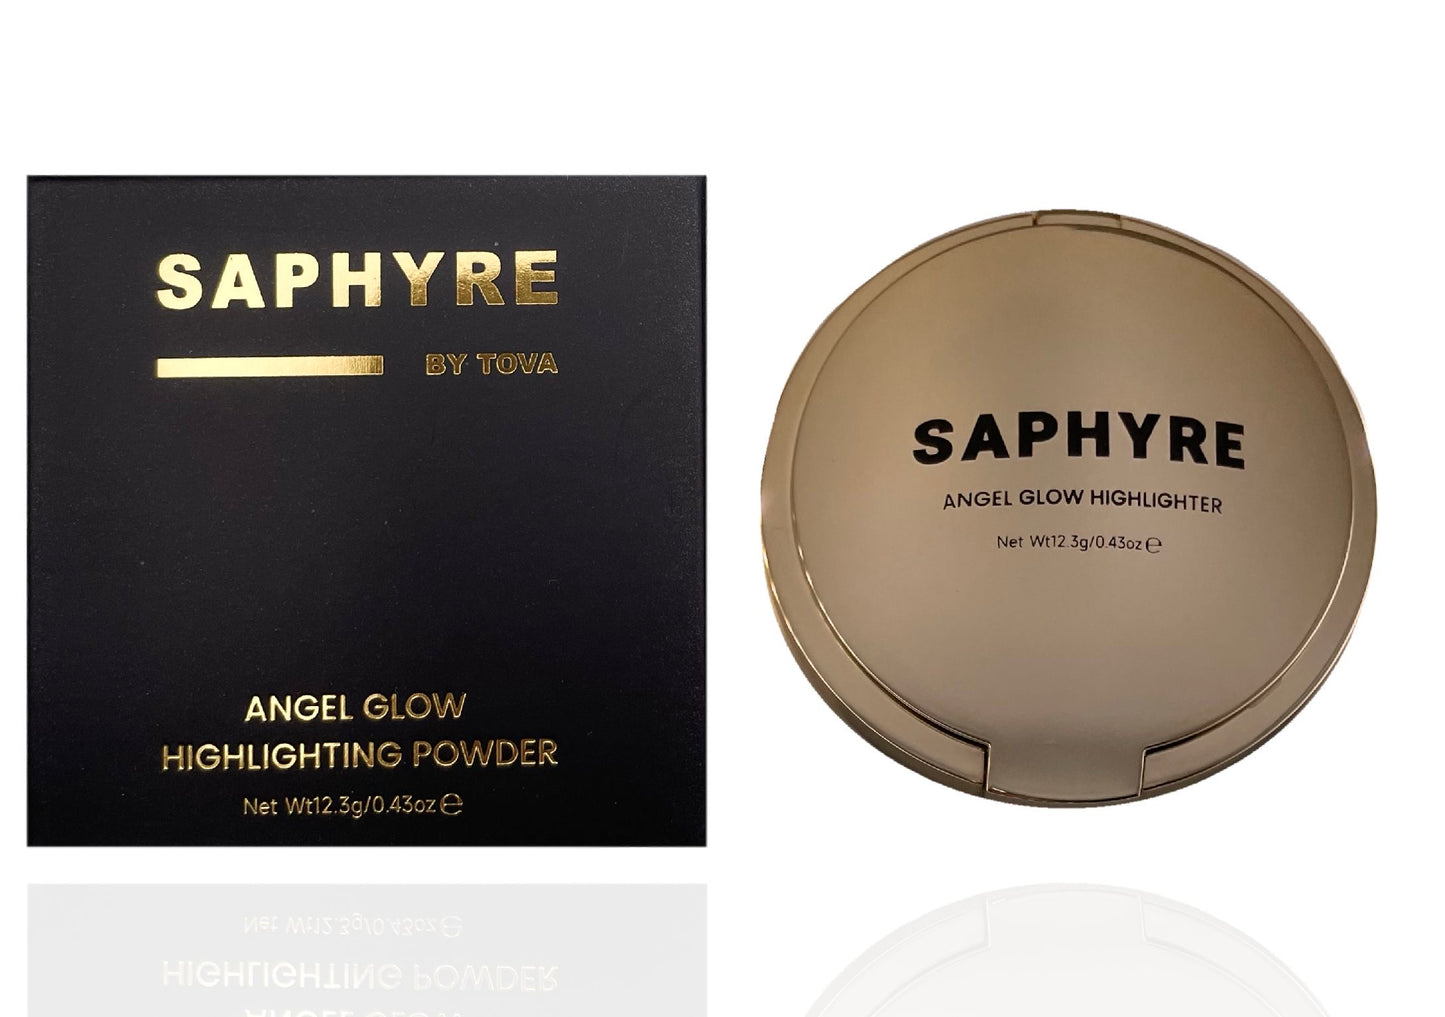 Saphyre by Tova Angel Glow Highlighting Powder